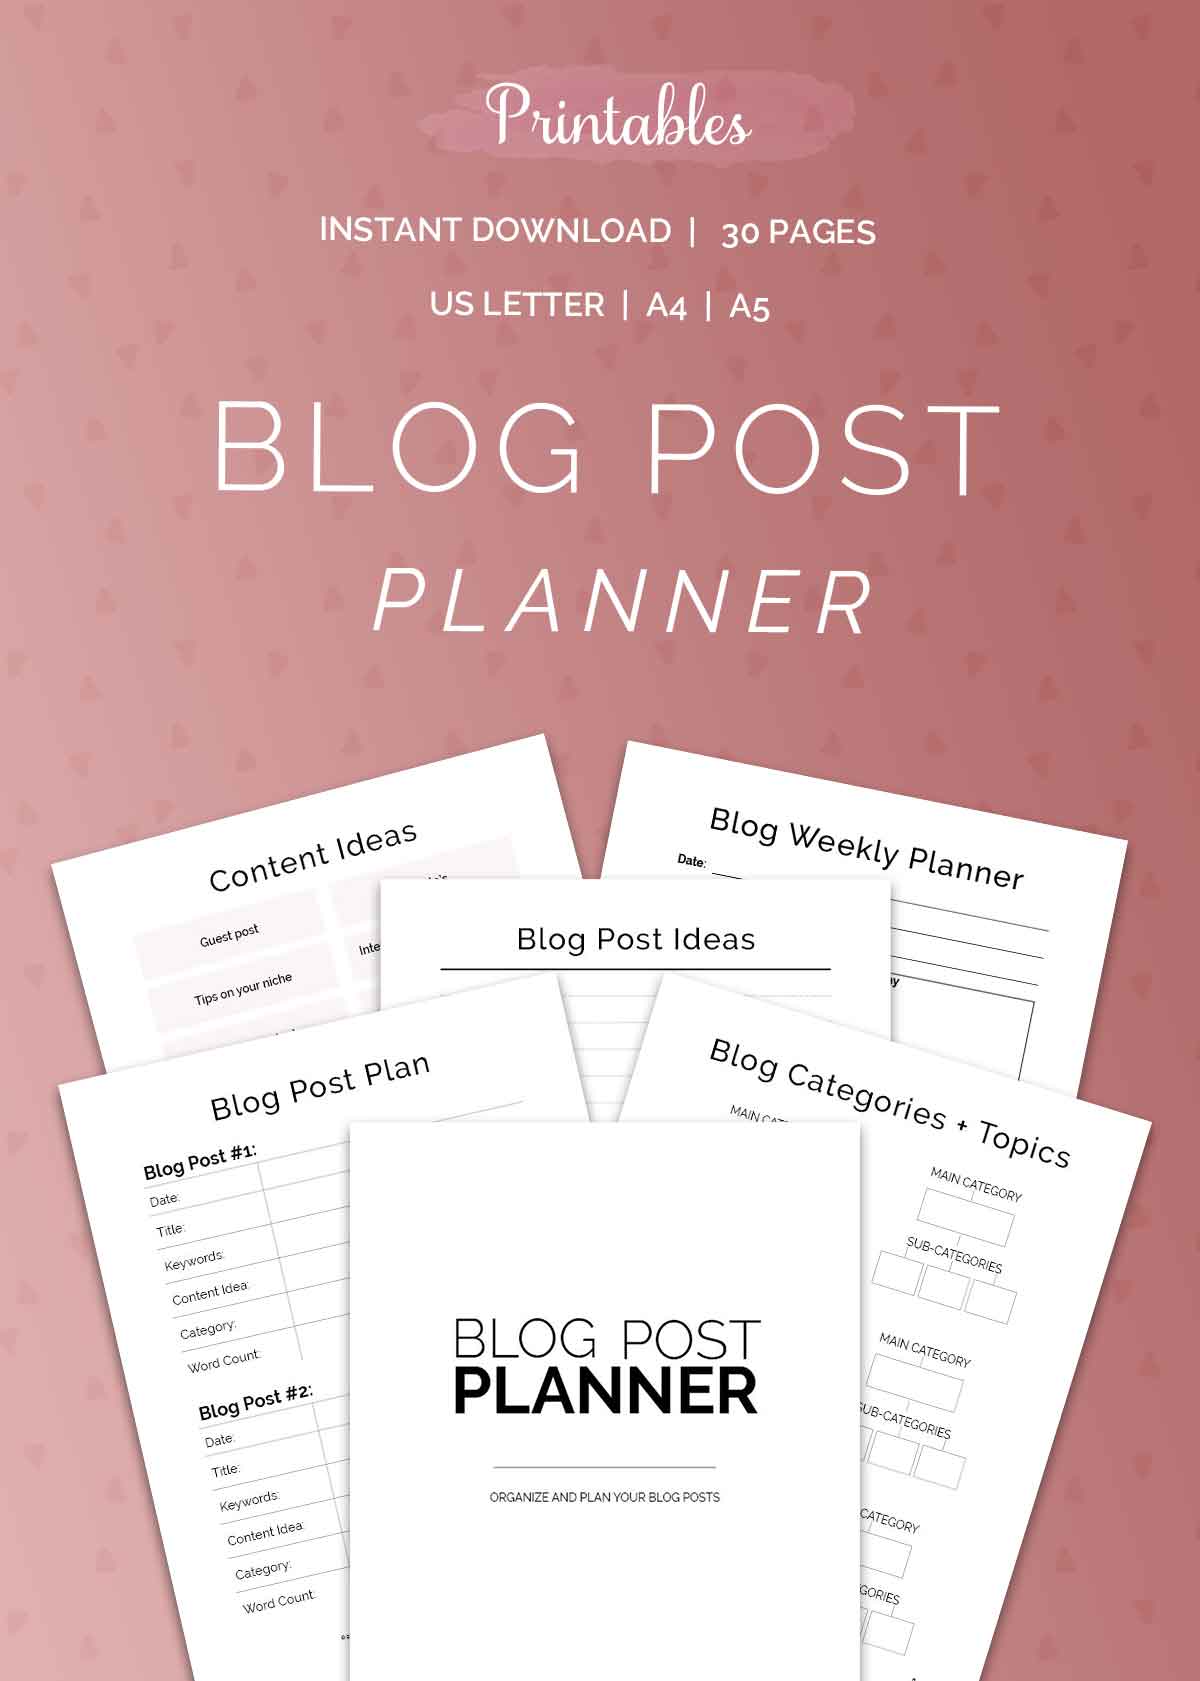 Blog Post Planner - Printables